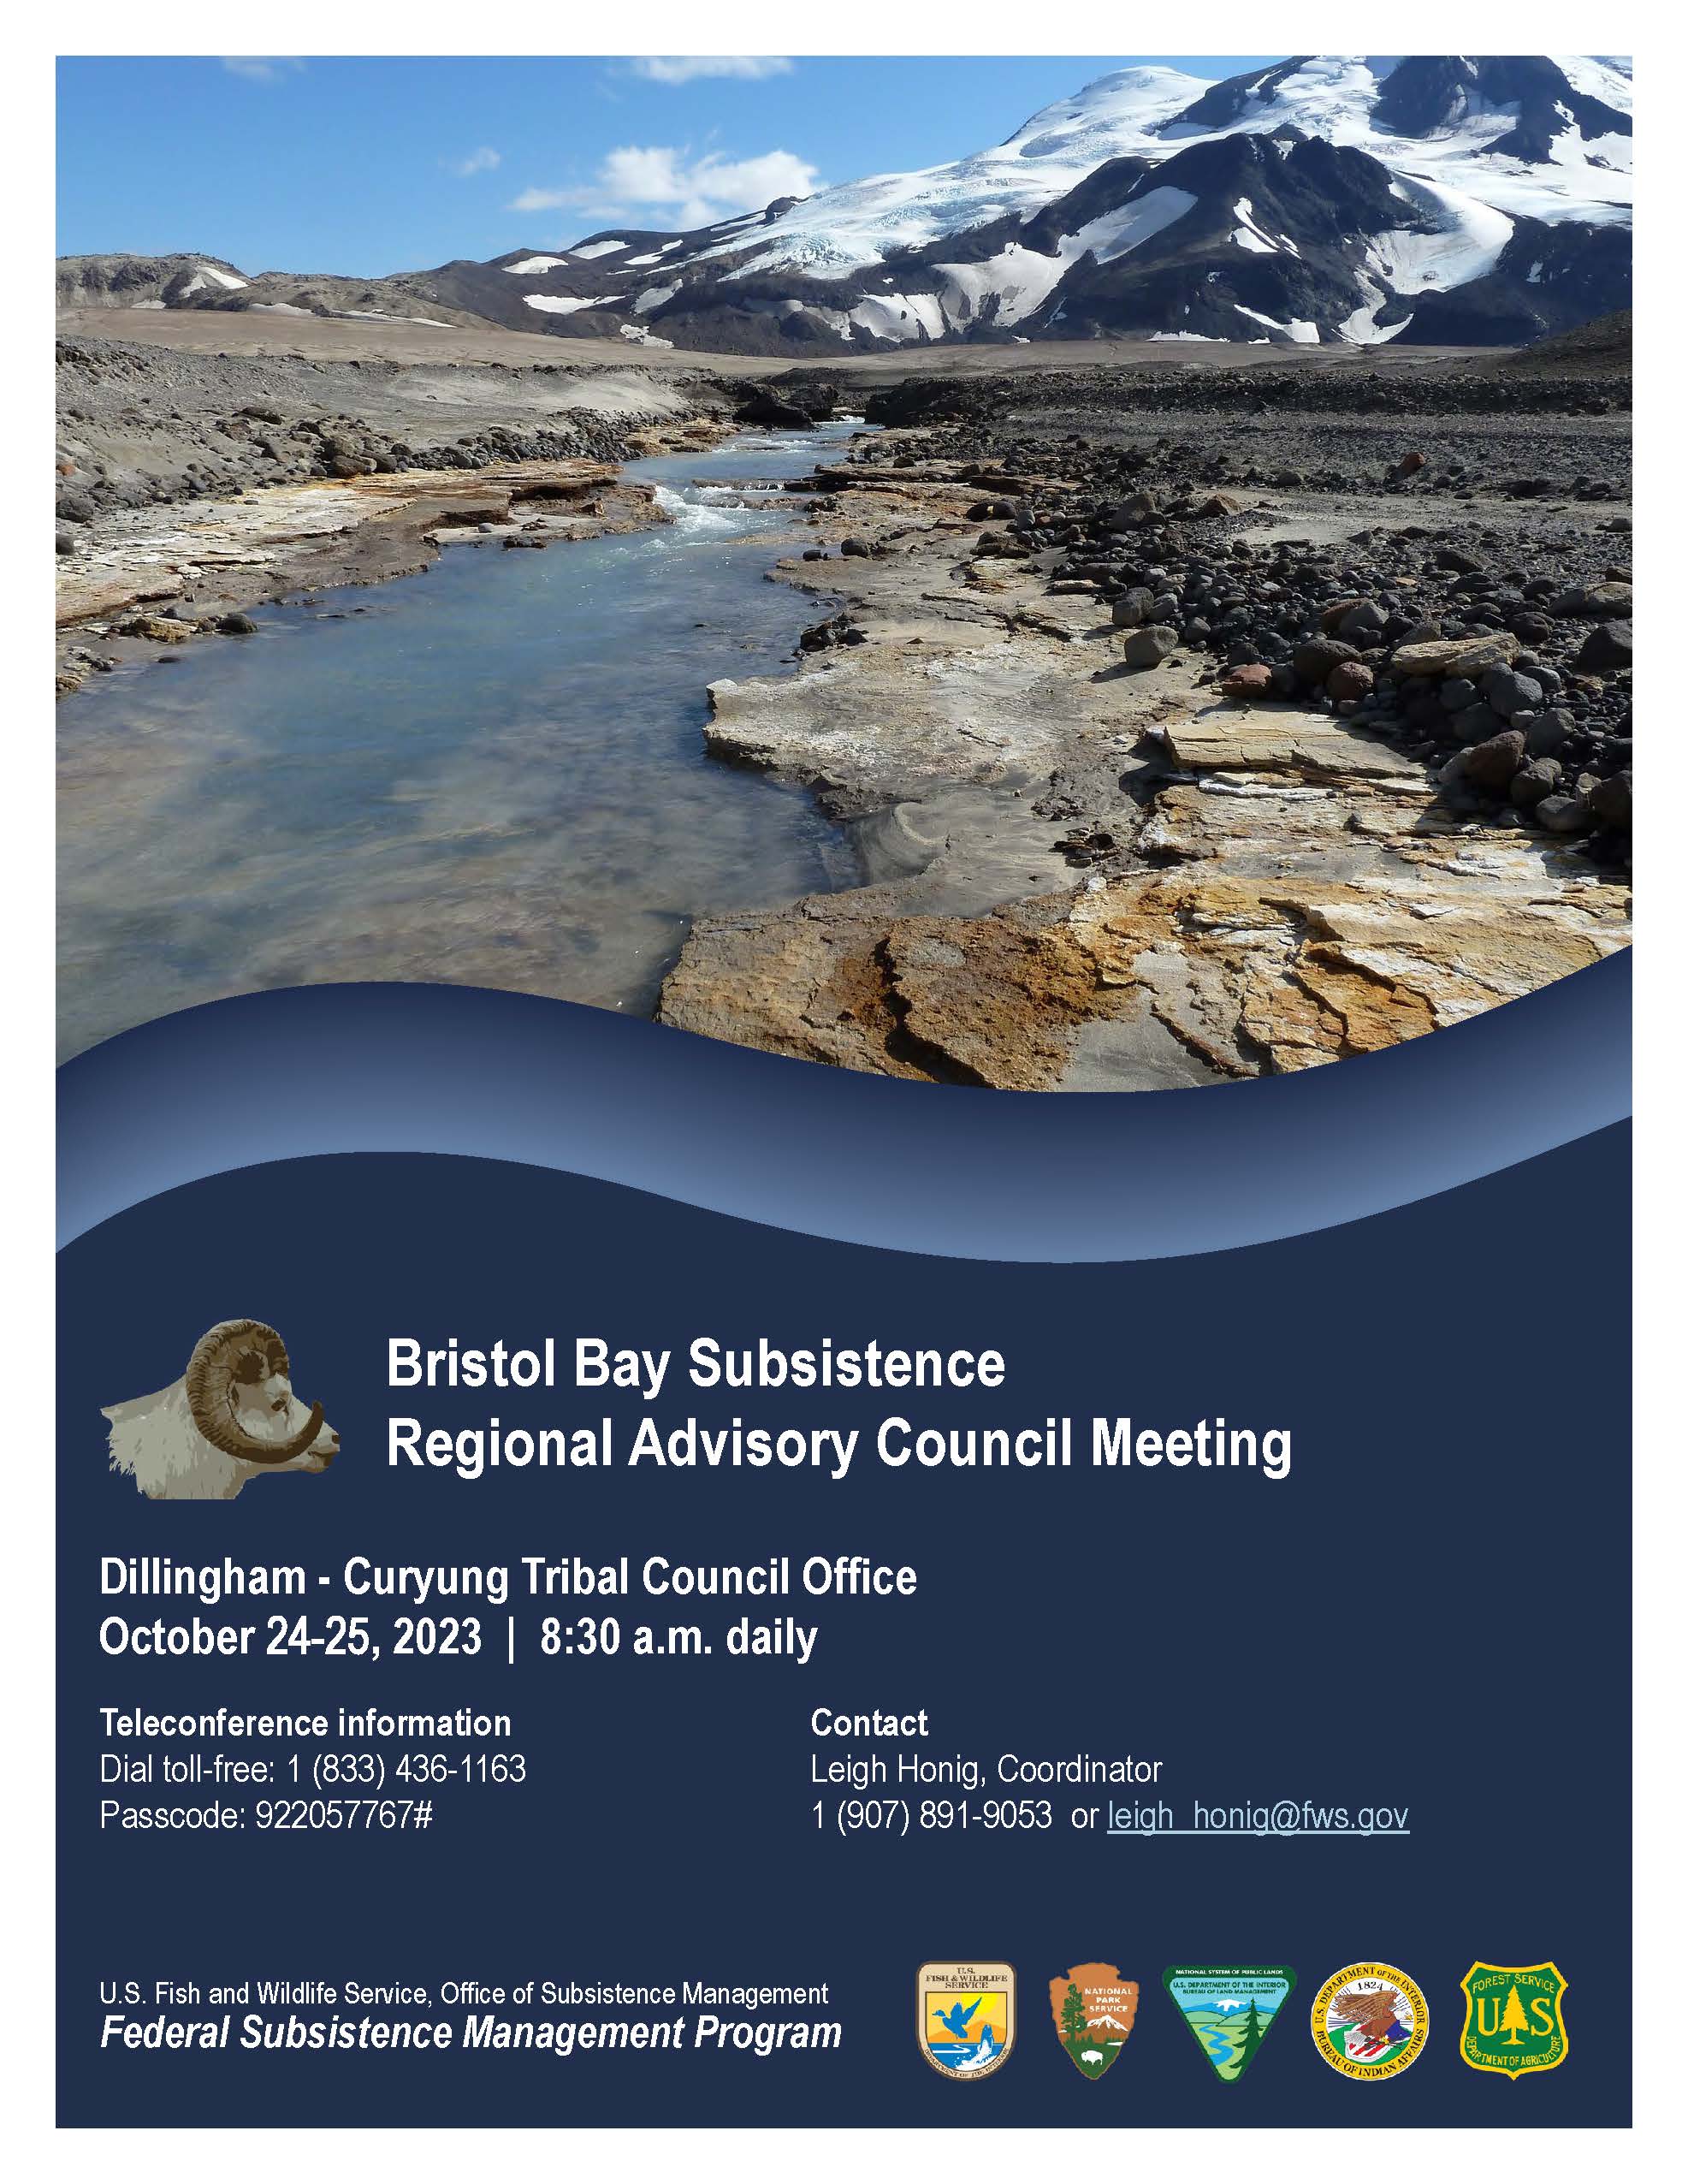 Bristol Bay Alaska Subsistence Advisory Council Meeting Flyer